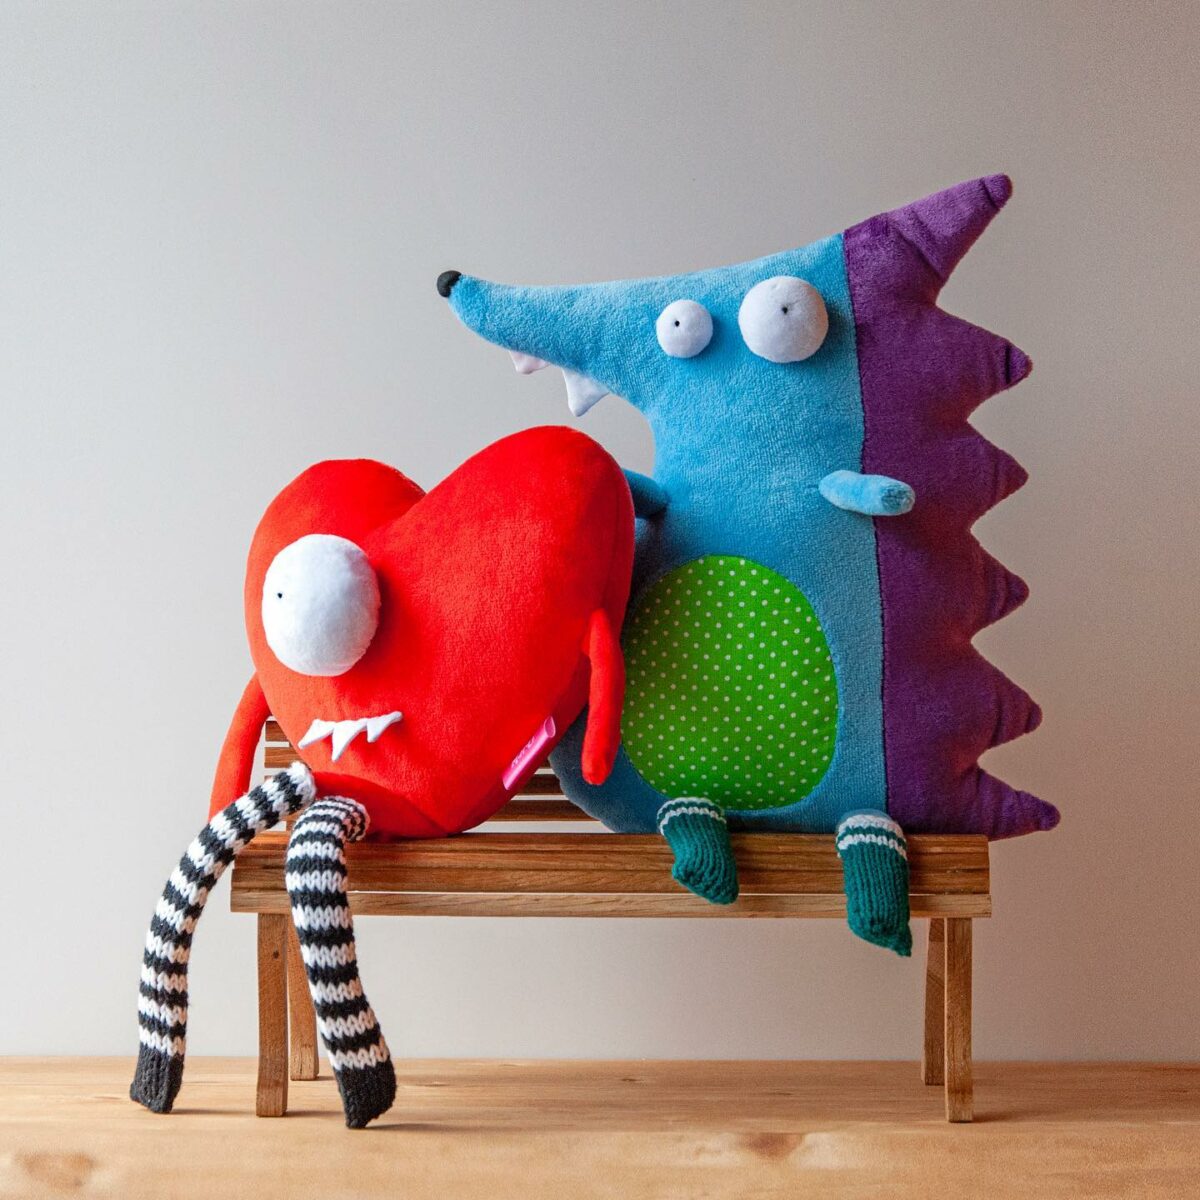 Colorful Handmade Toys Of Quirky Creatures By Lidiya Marinchuk (10)